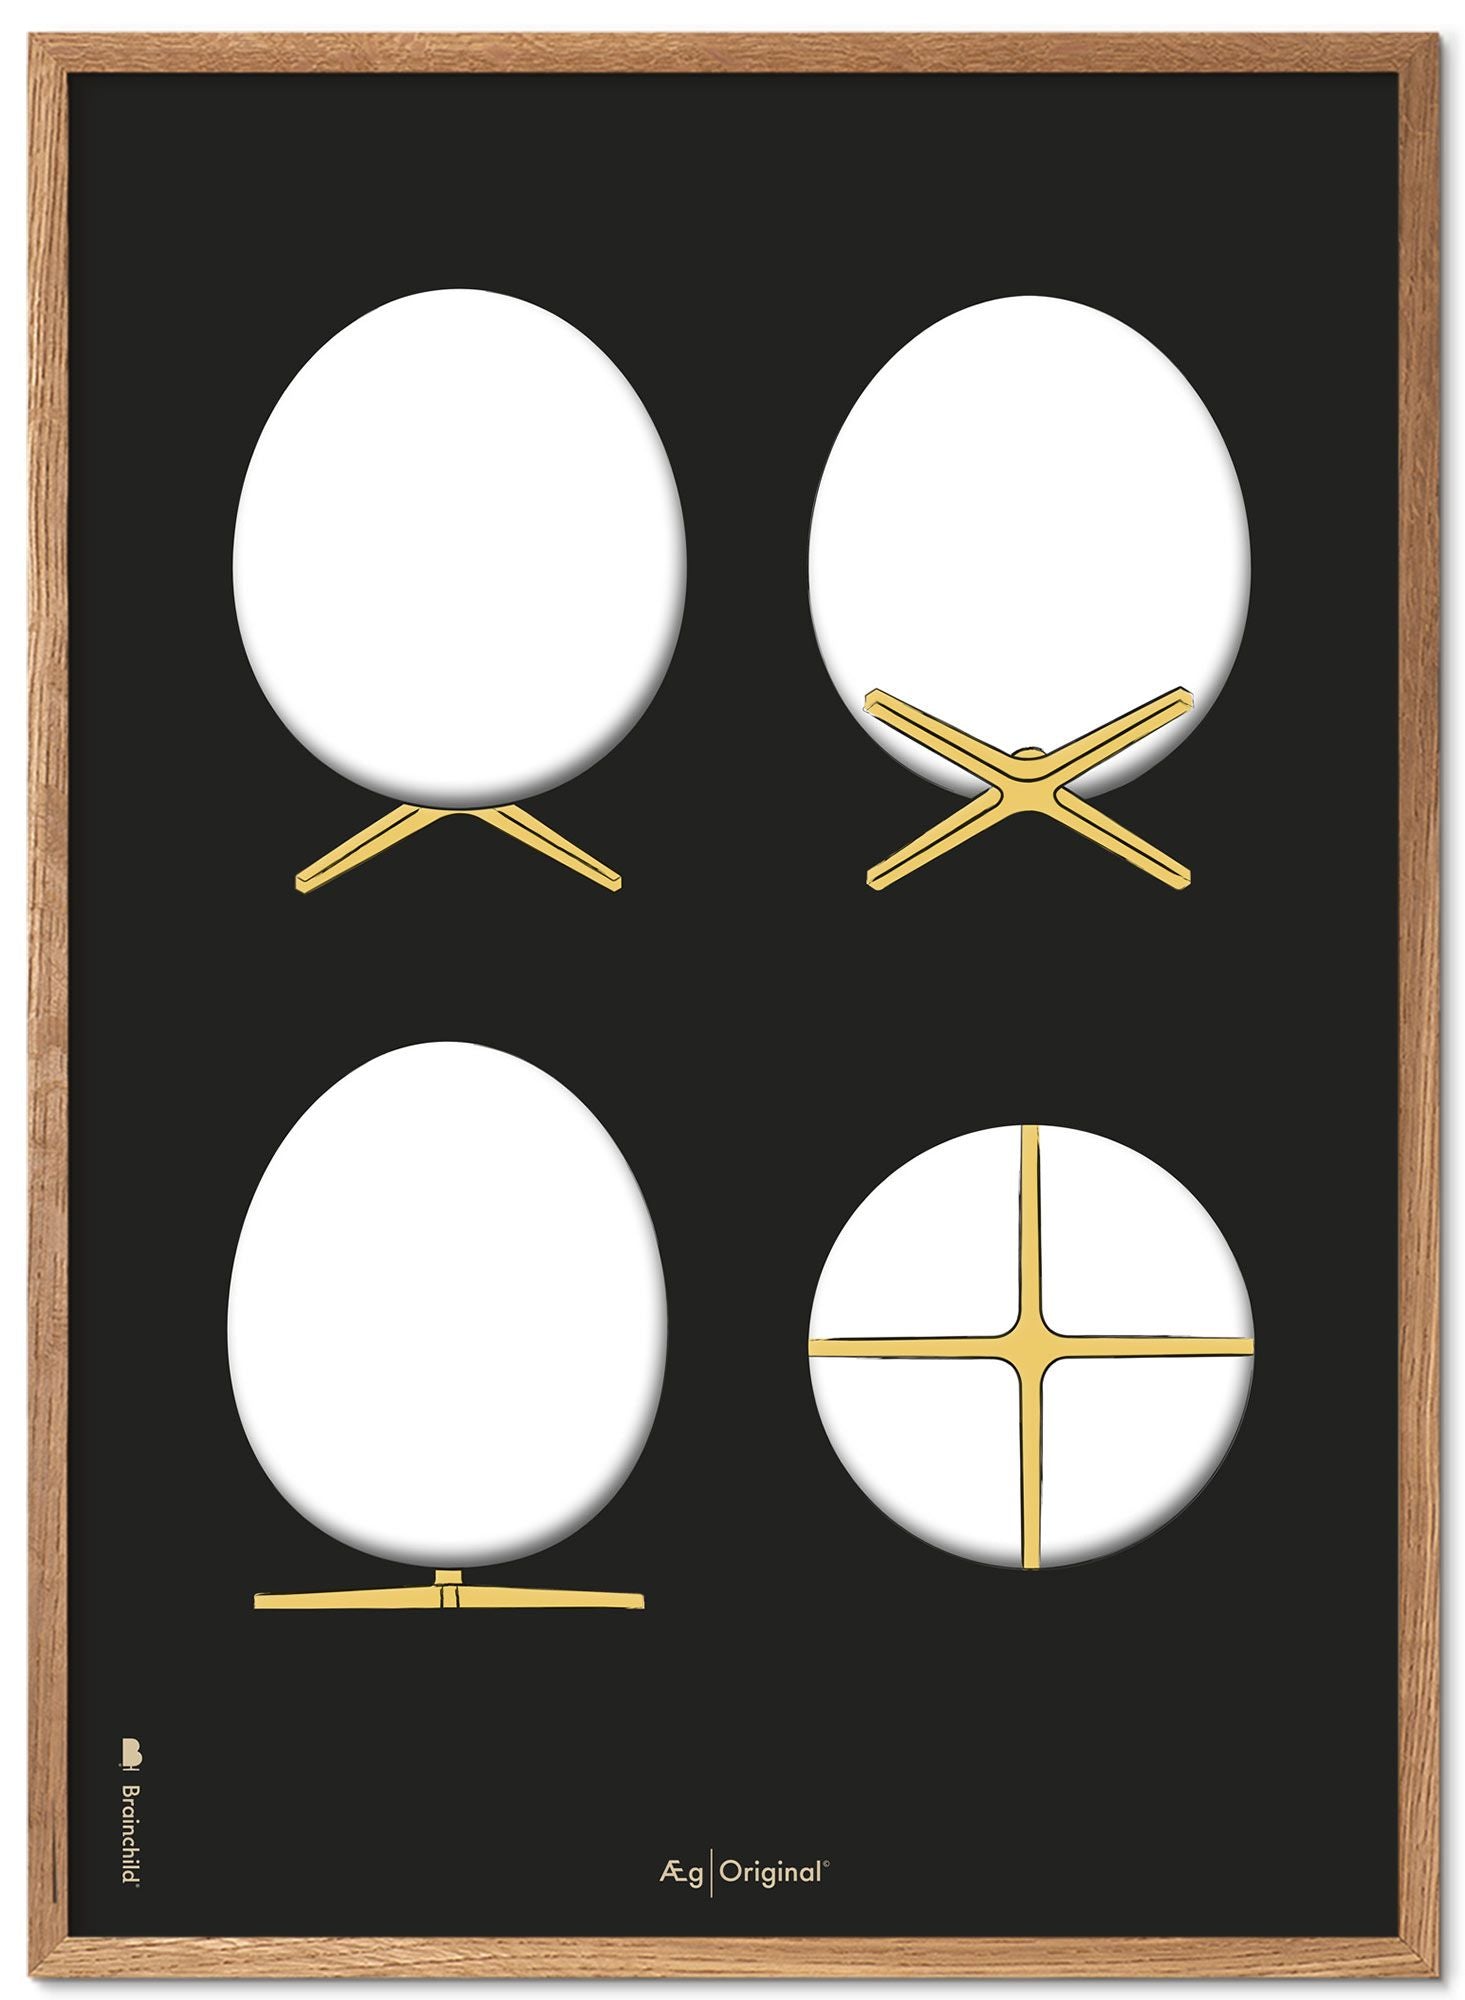 Brainchild The Egg Design Sketches Poster Frame made of Light Wood 50x70 Cm, Black Background